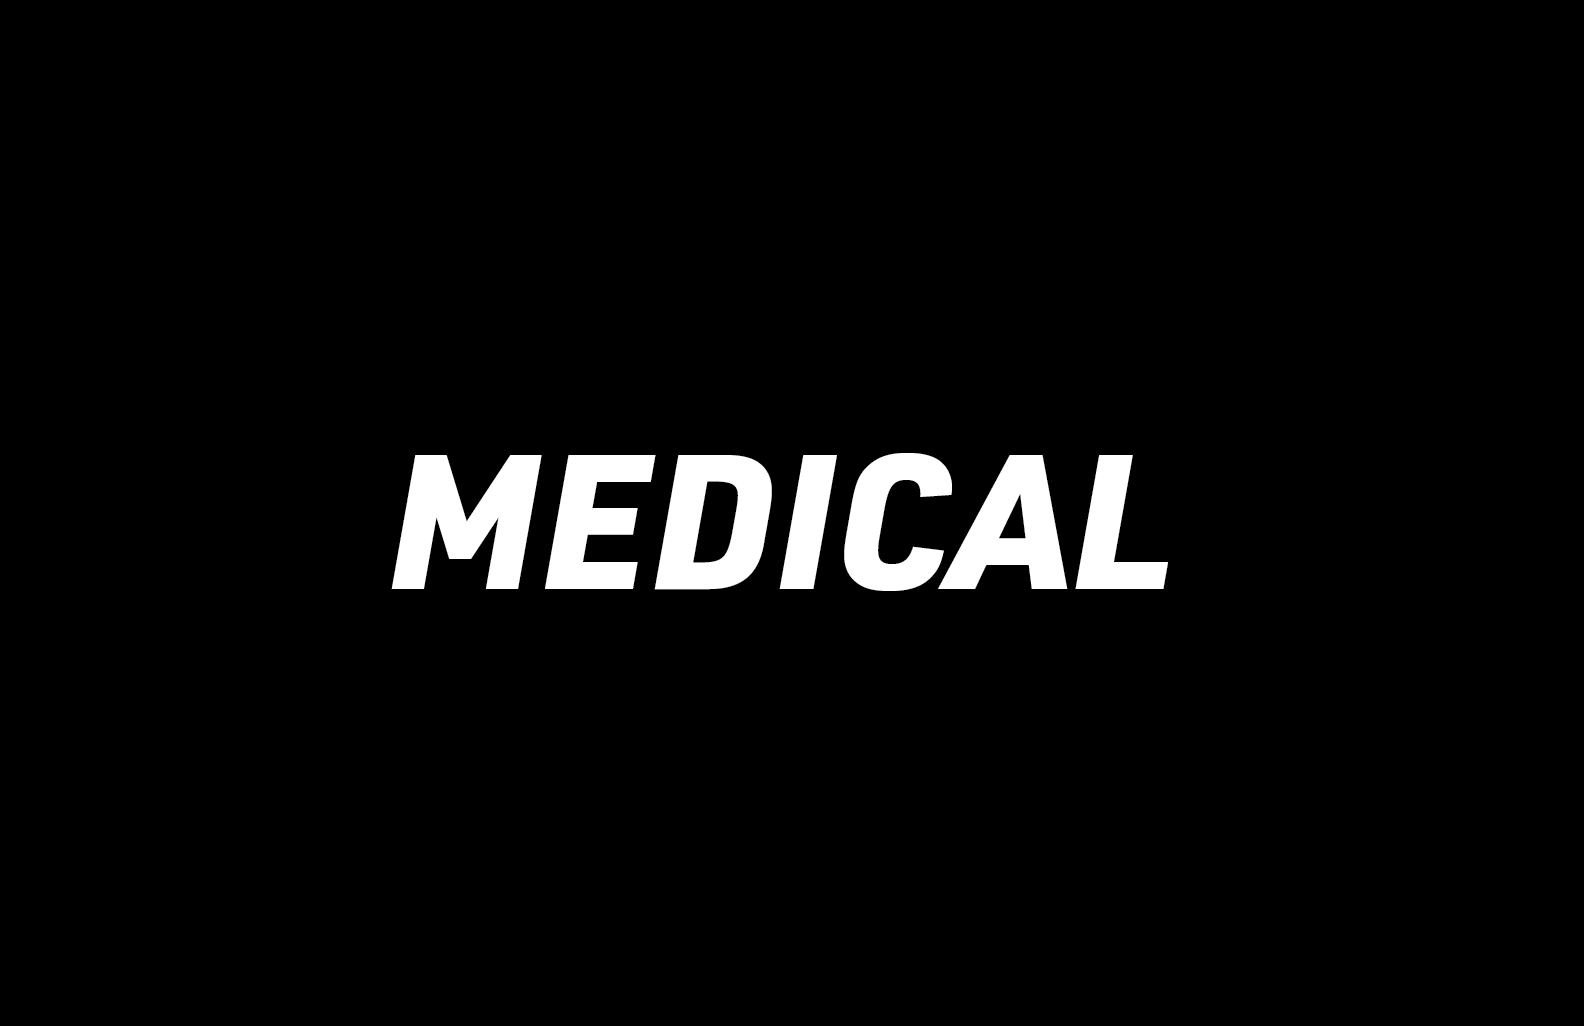 Medical-01.png